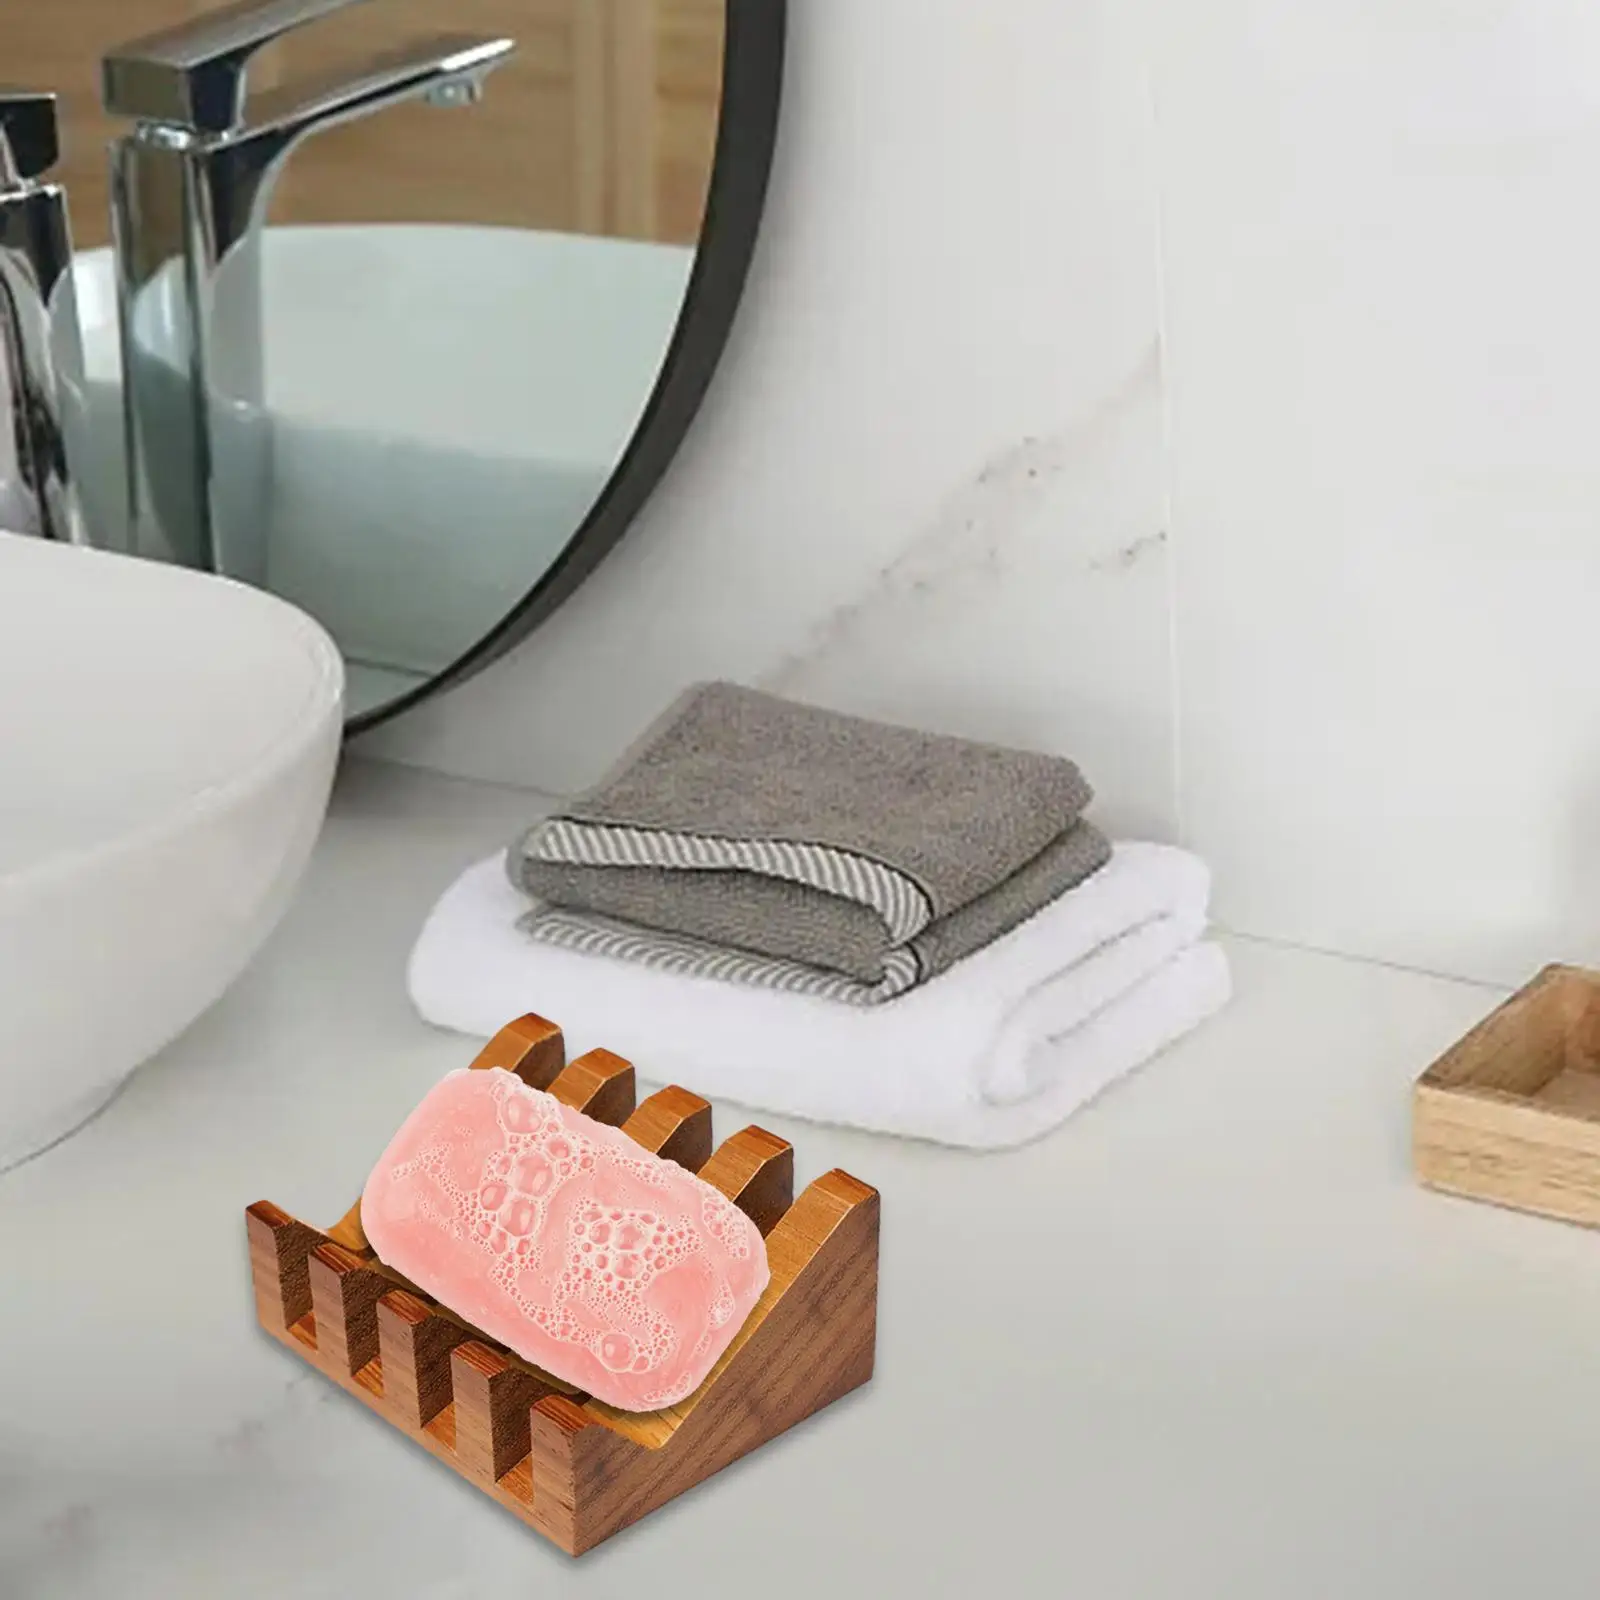 Wooden Soap Dish Home Decor Soap Tray Tabletop Self Draining Soap Dish Soap Bar Holder for Shower Bathroom Bathtub Sink Kitchen